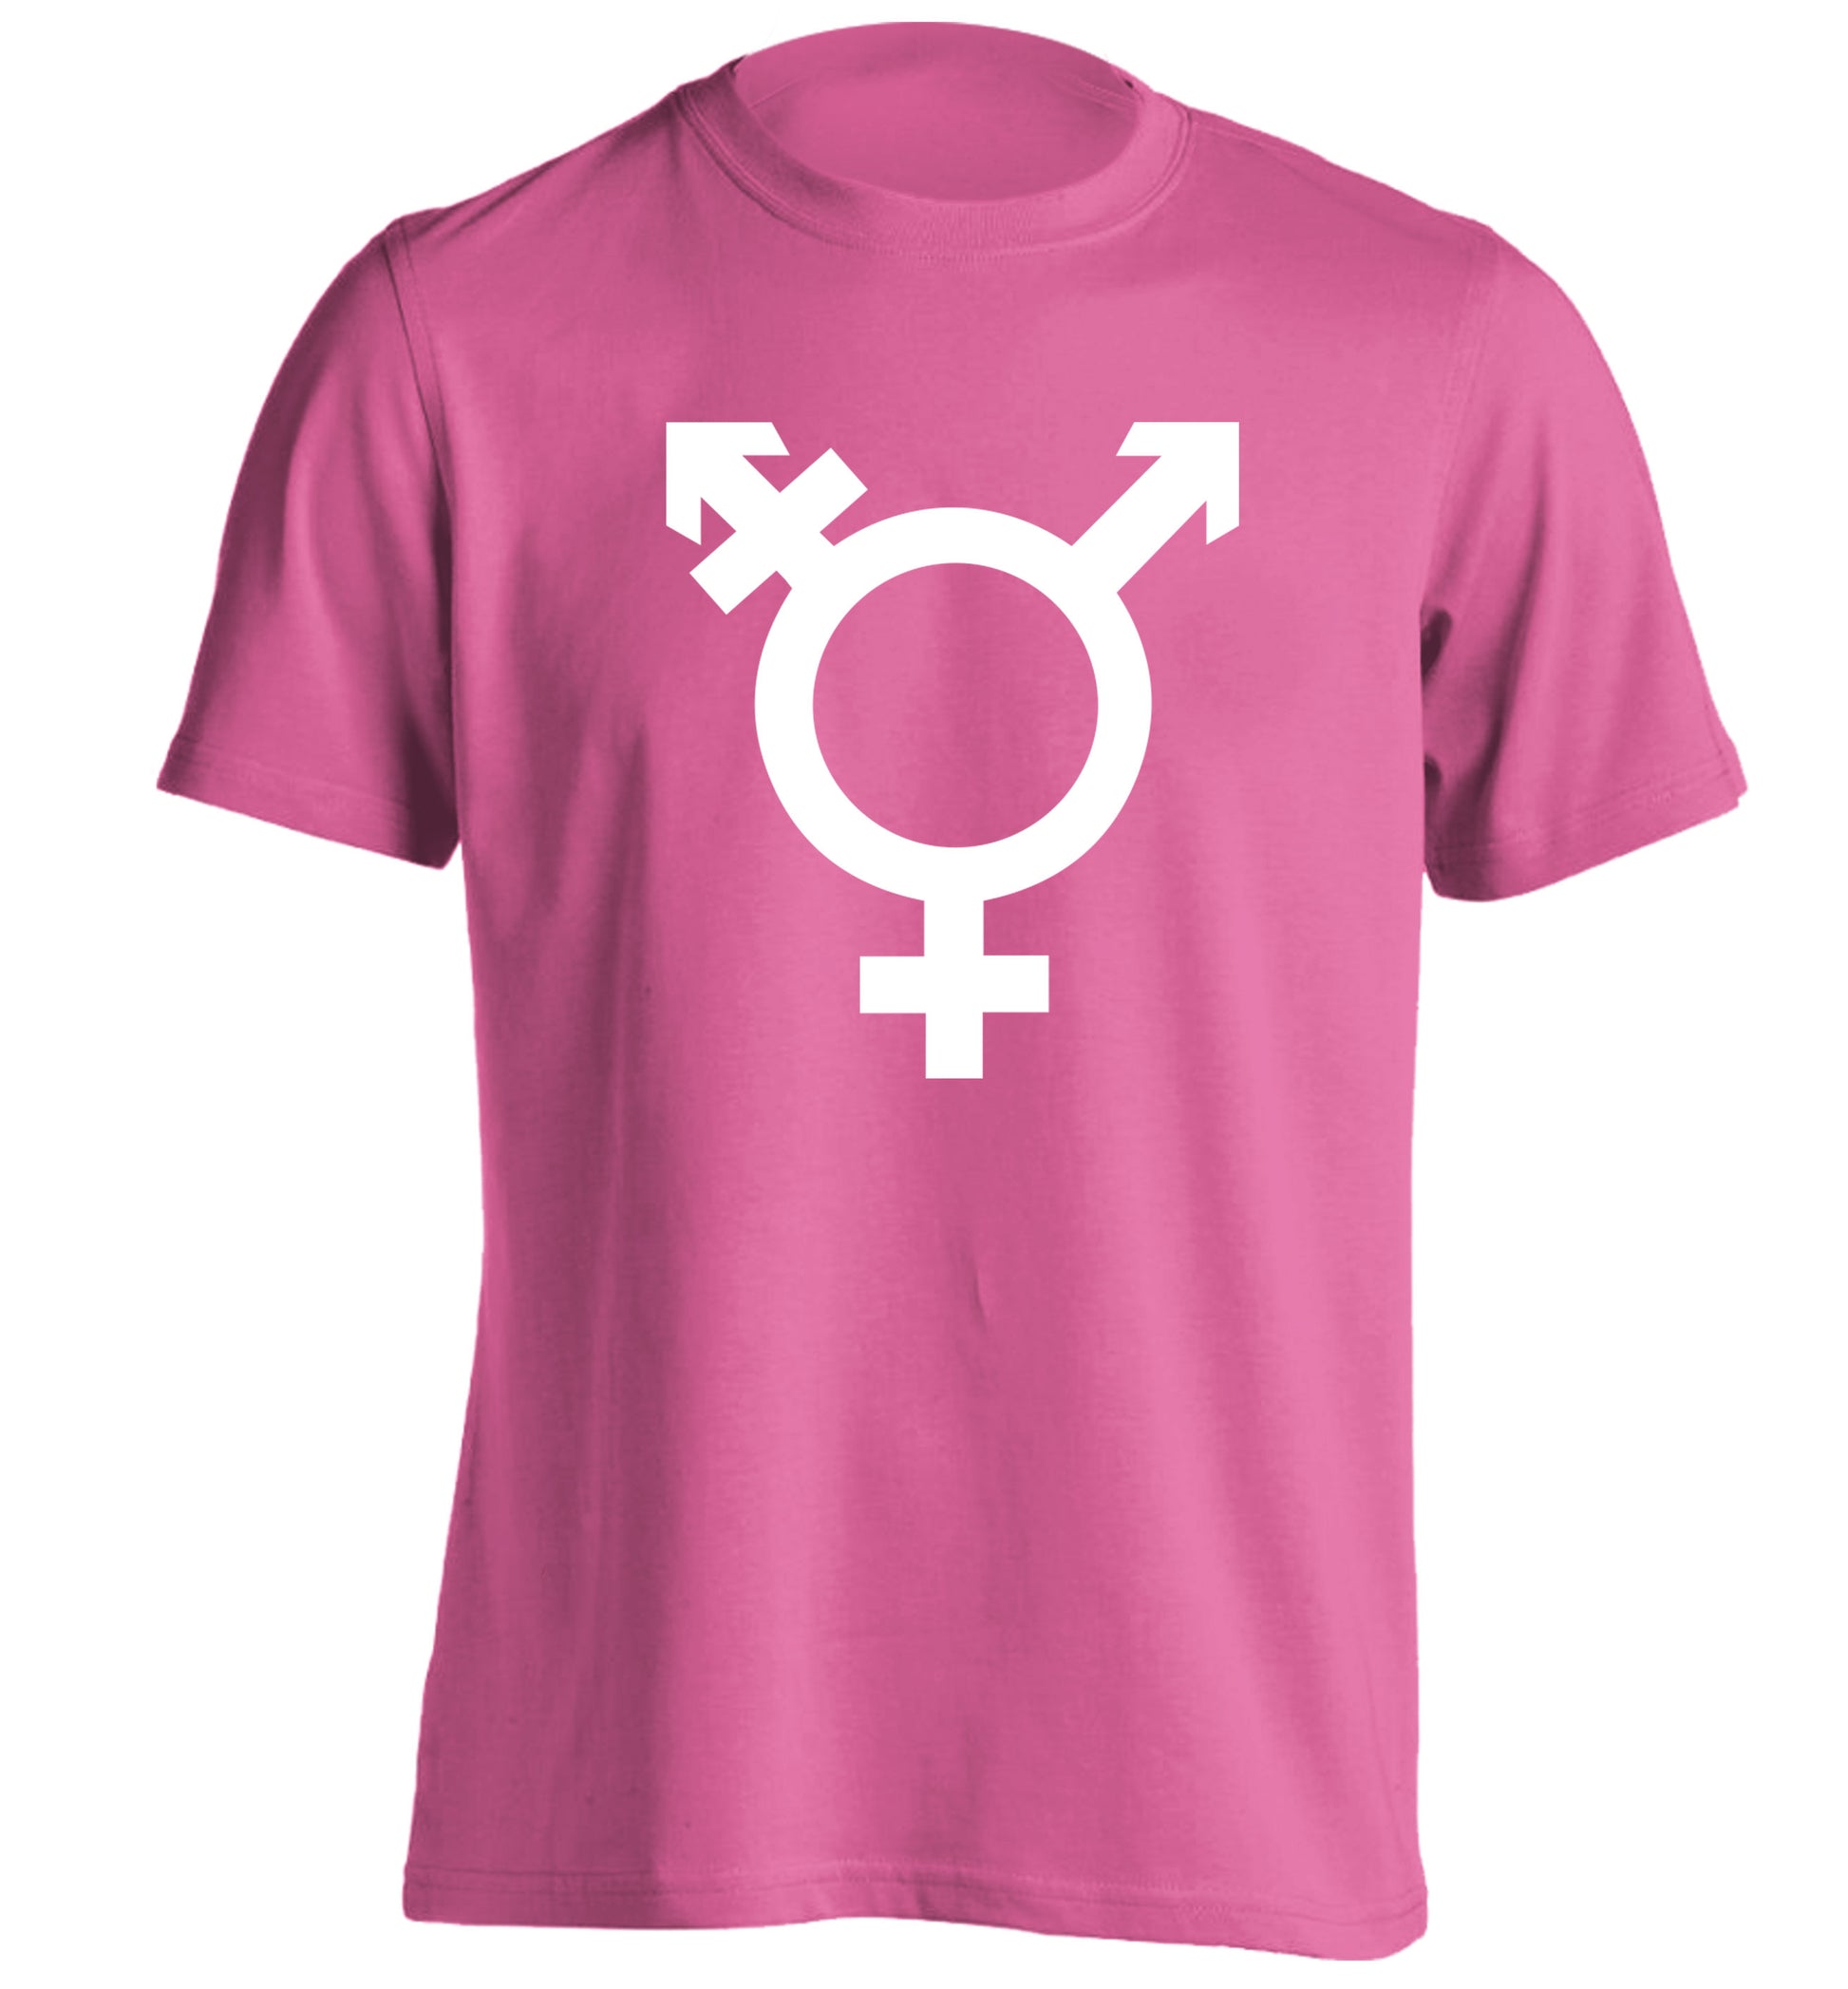 Gender neutral symbol large adults unisex pink Tshirt 2XL